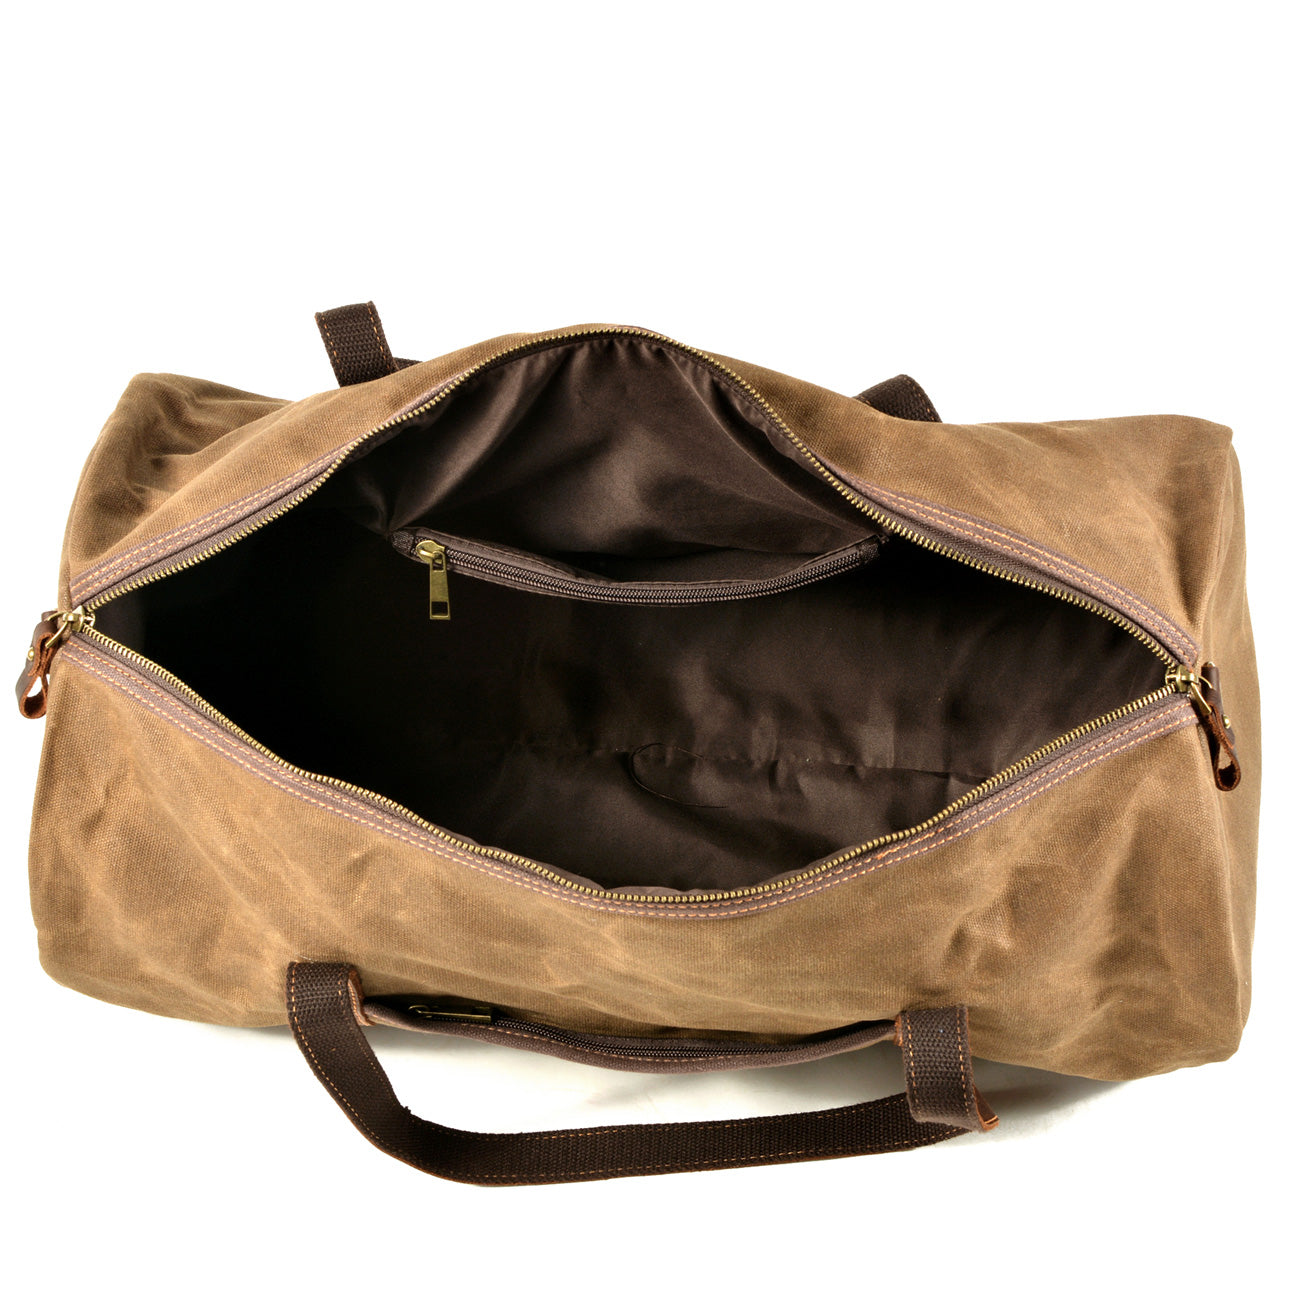 huiswerk maken lens bedenken Military Duffle Bag - Army Style Travel Bag | BEAUVAL – EIKEN